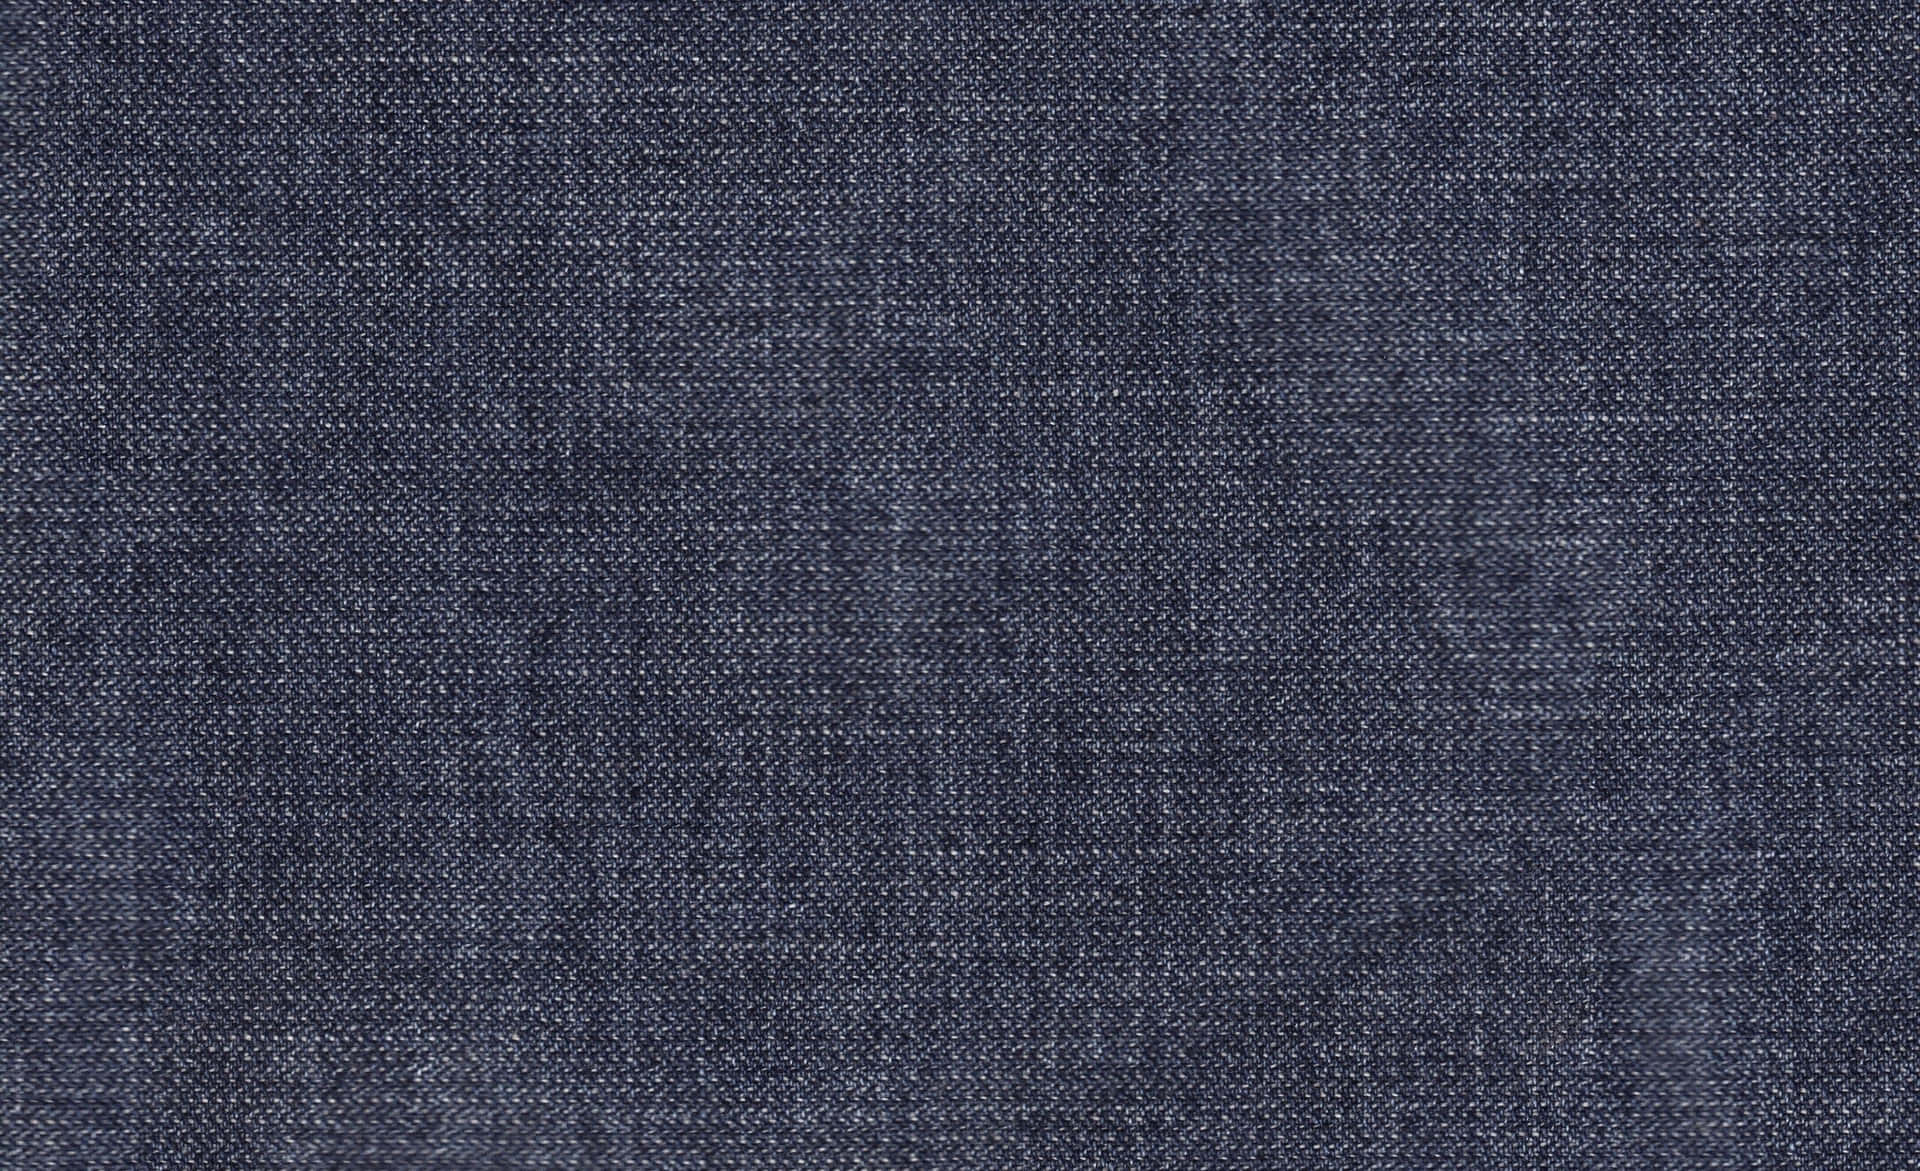 A Dark Blue Fabric With A Plain Texture